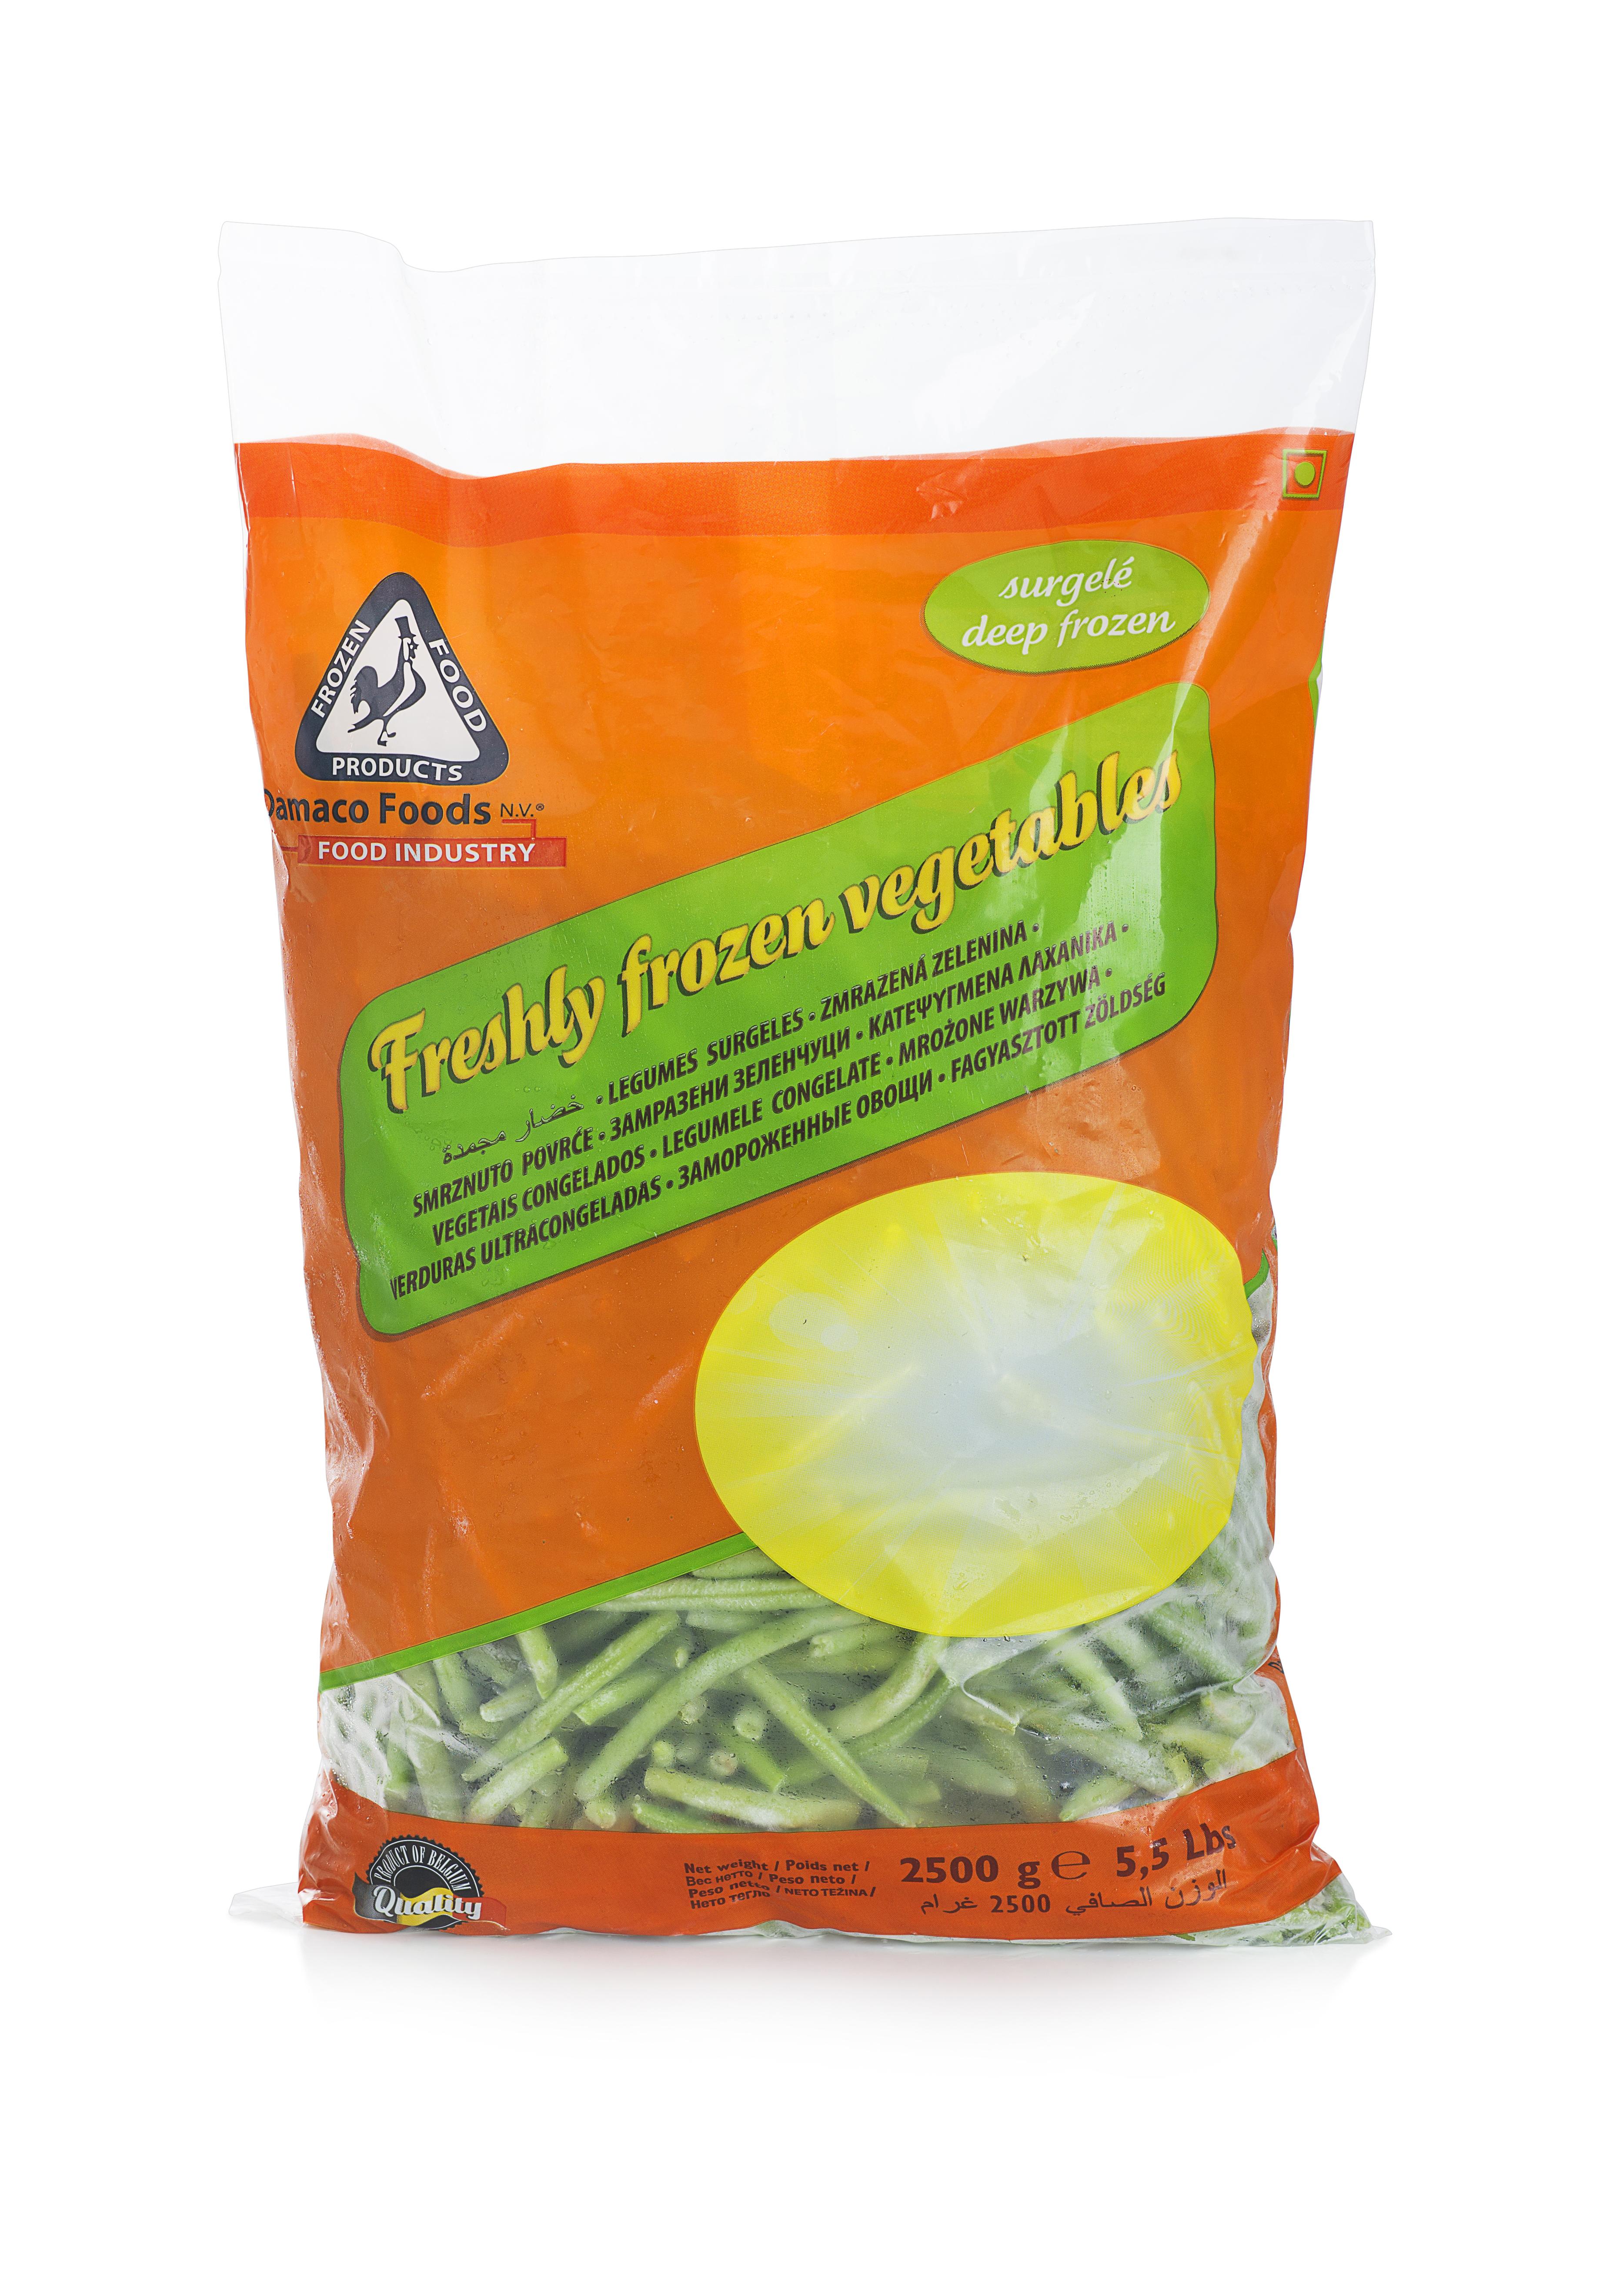 green beans damaco brand packaging